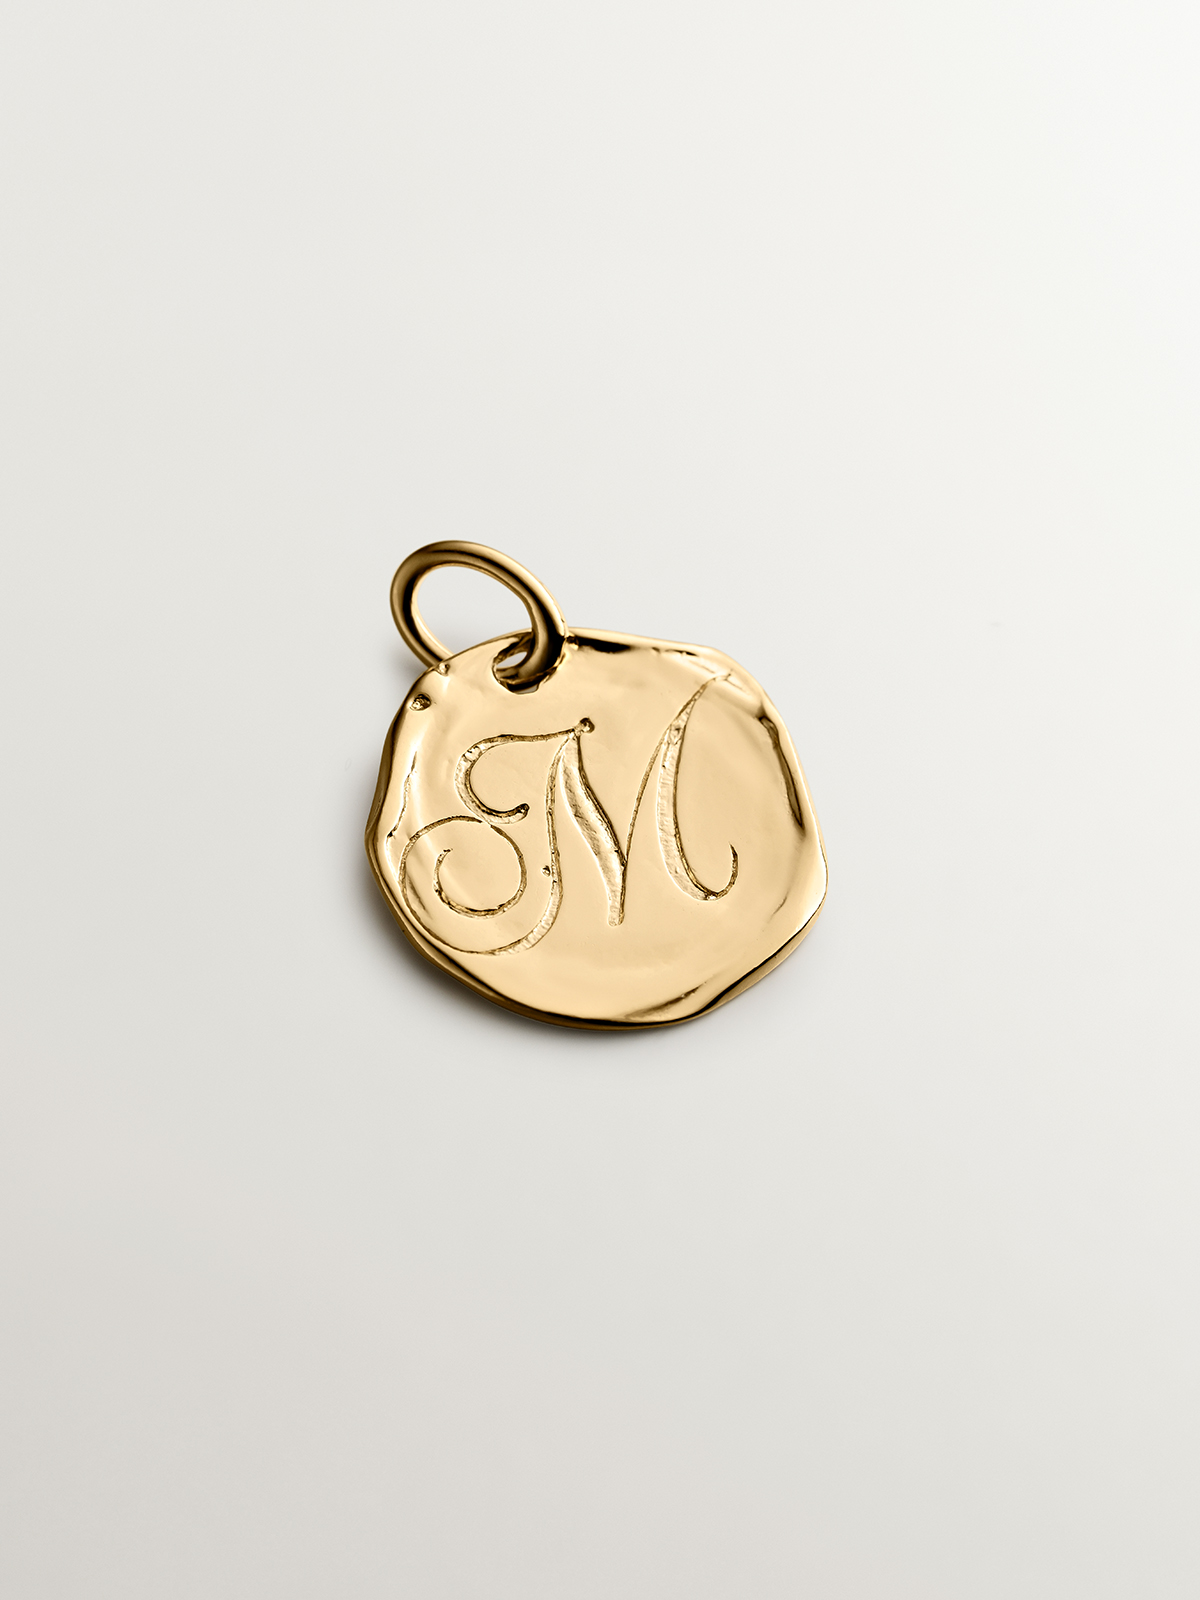 Charm artesanal de plata 925 bañada en oro amarillo de 18K con inicial M